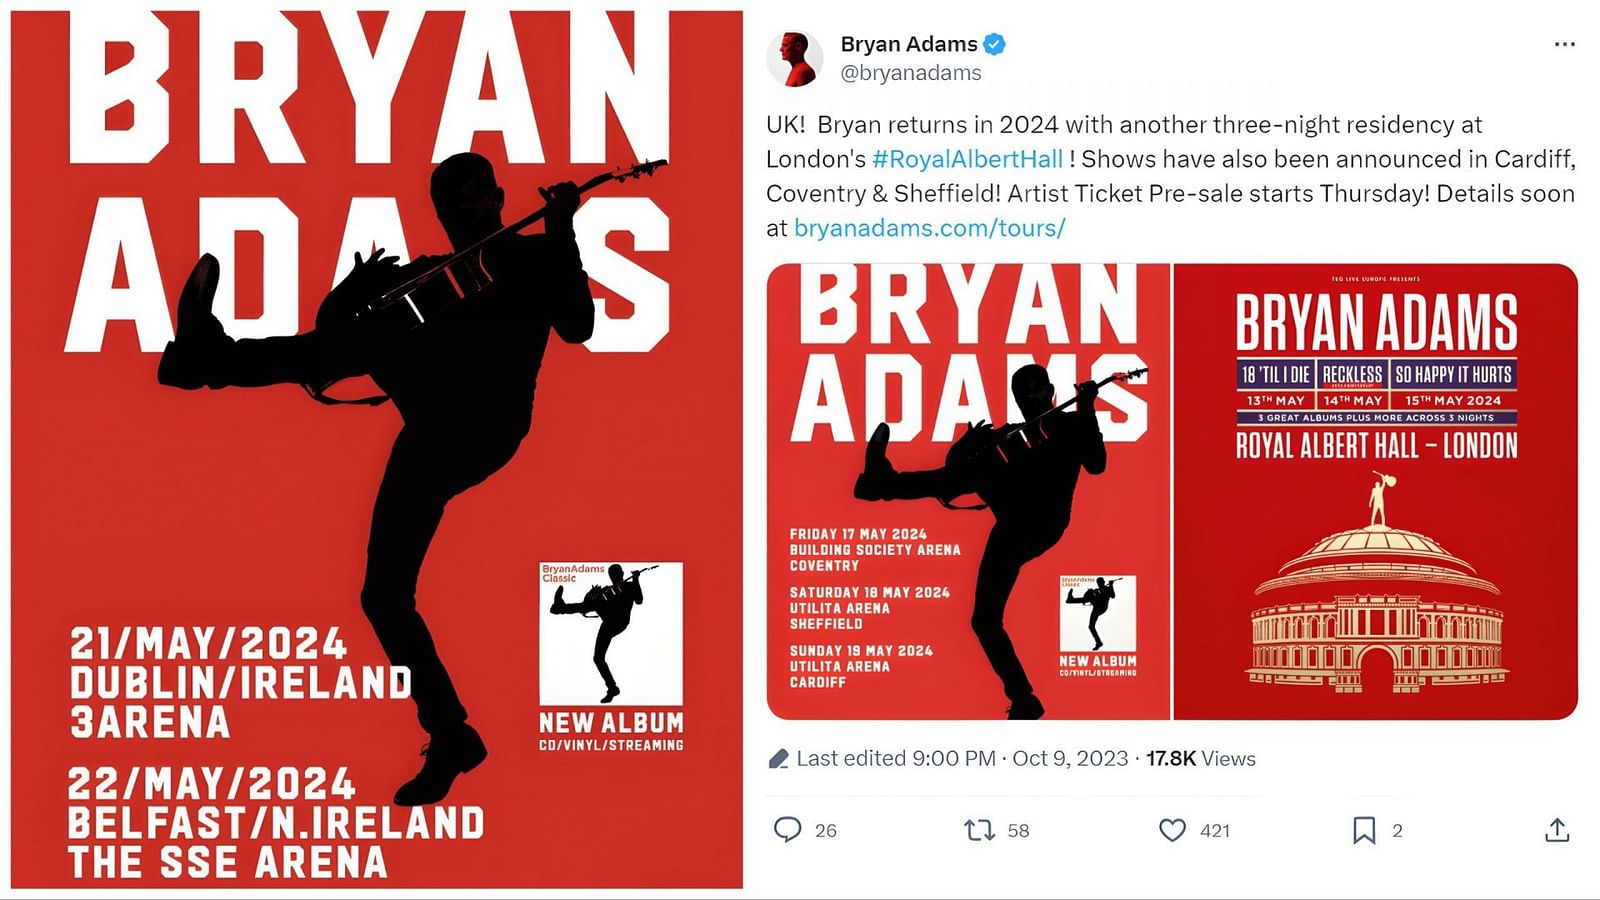 Bryan Adams UK tour and Royal Albert Hall residency 2024 Presale